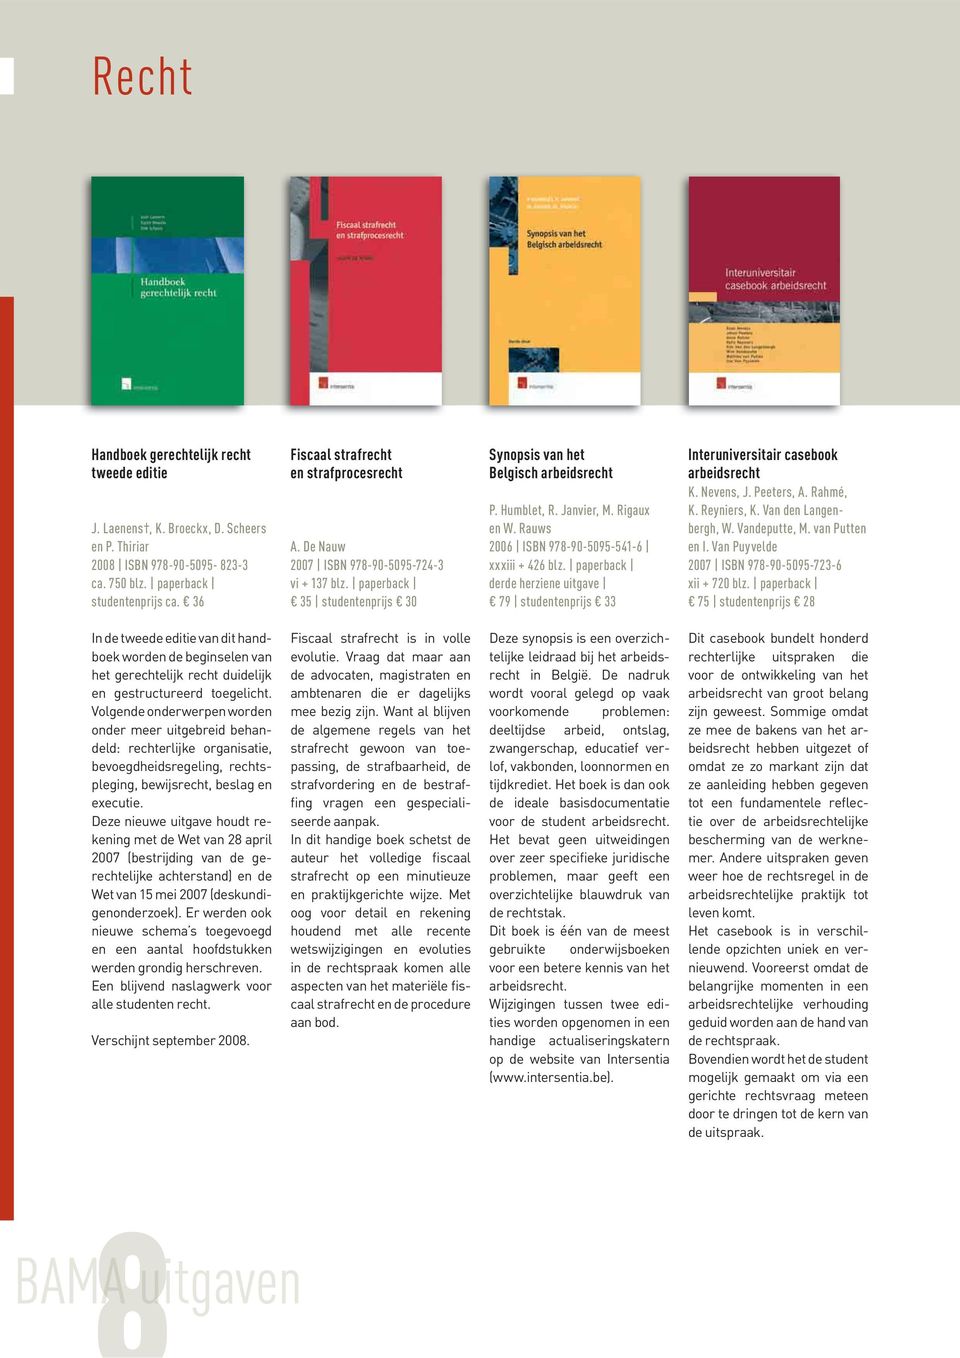 Janvier, M. Rigaux en W. Rauws 2006 ISBN 978-90-5095-541-6 xxxiii + 426 blz. paperback derde herziene uitgave 79 studentenprijs 33 Interuniversitair casebook arbeidsrecht K.